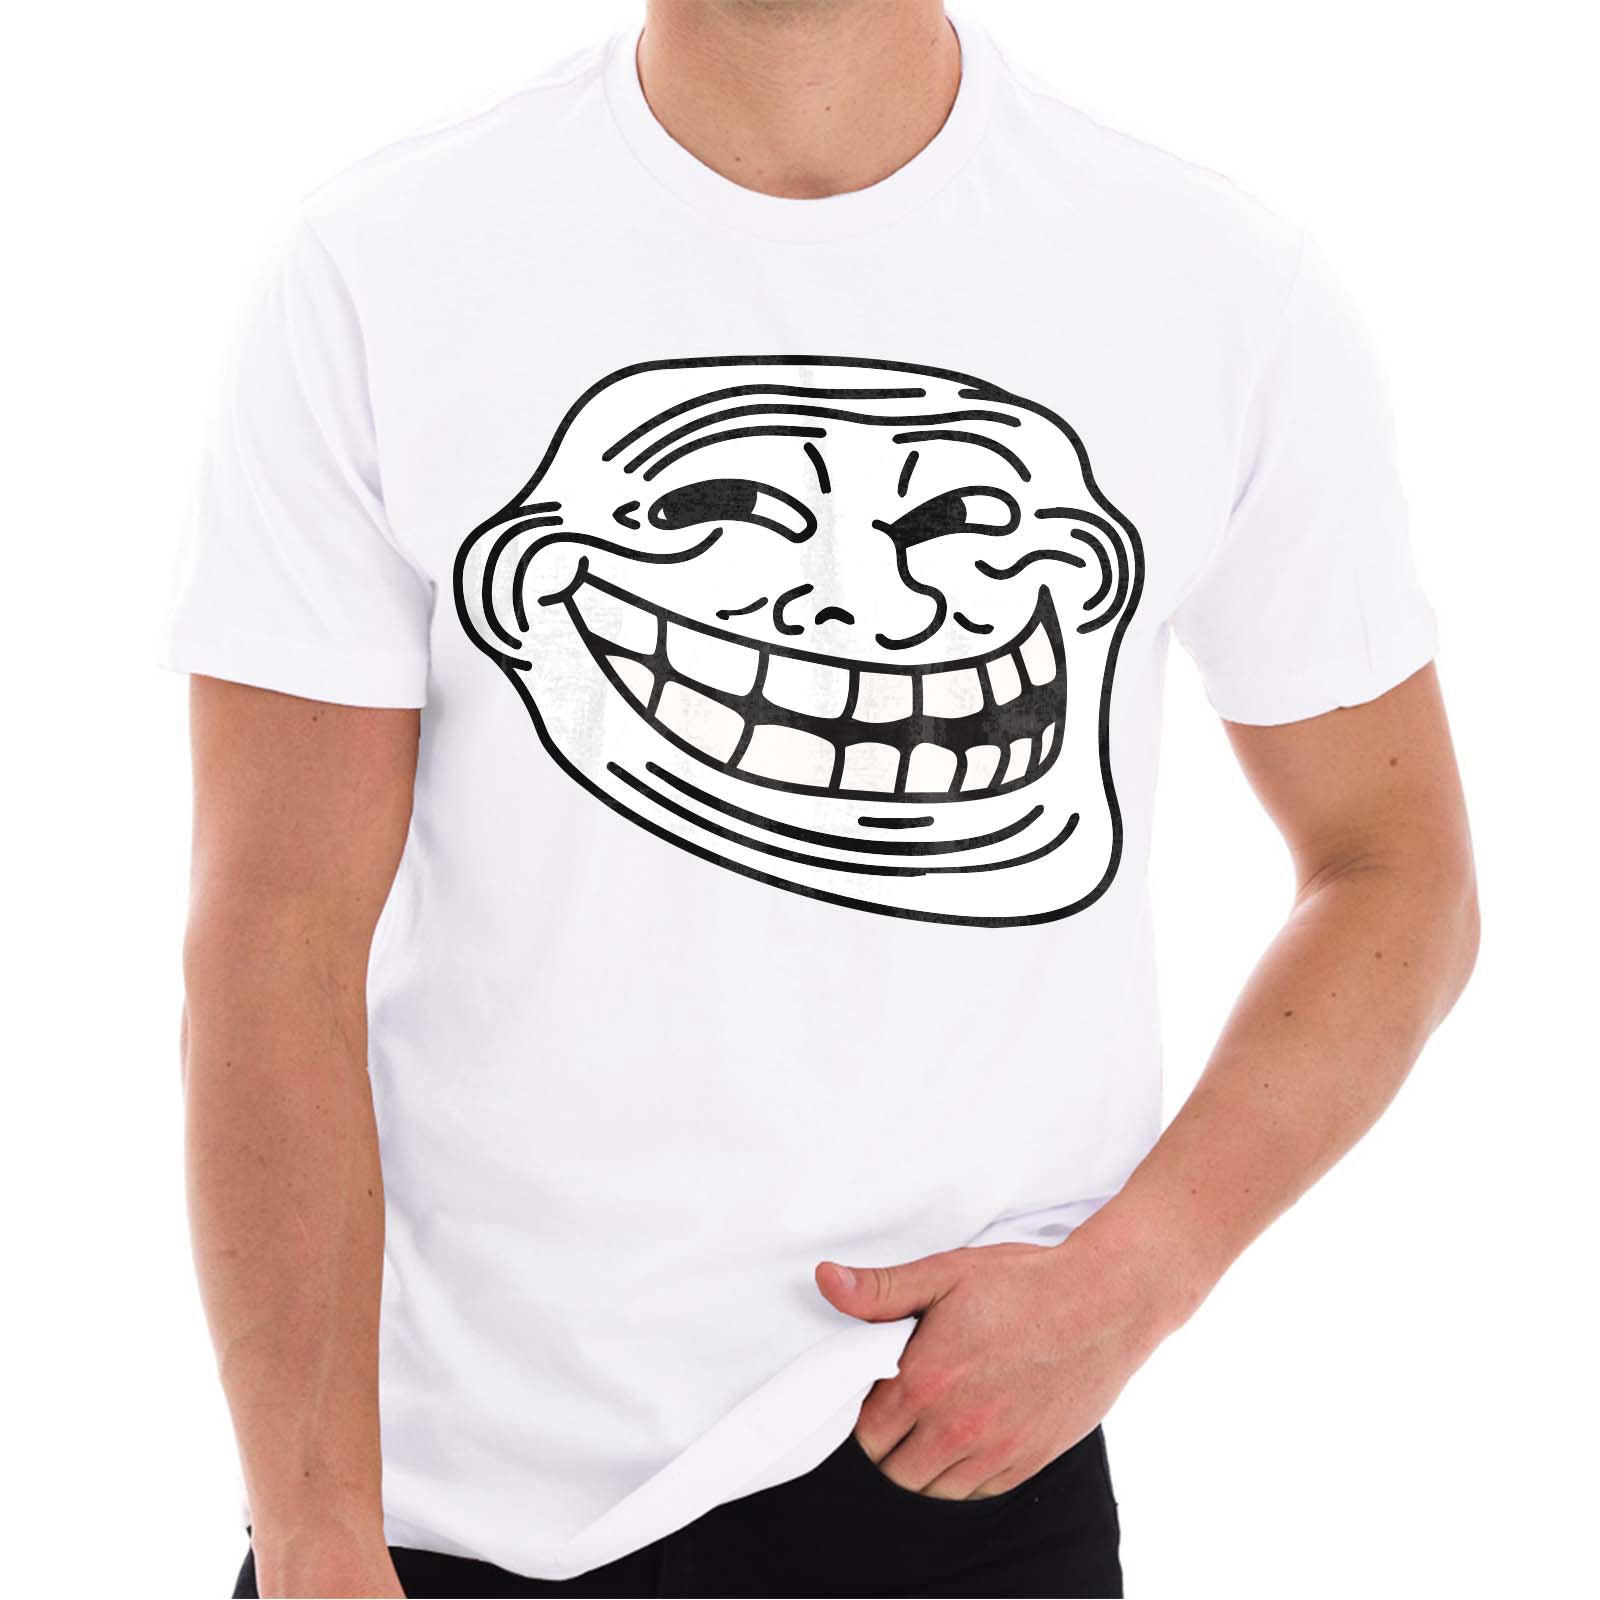 Troll Face Meme T Shirt, Troll Face